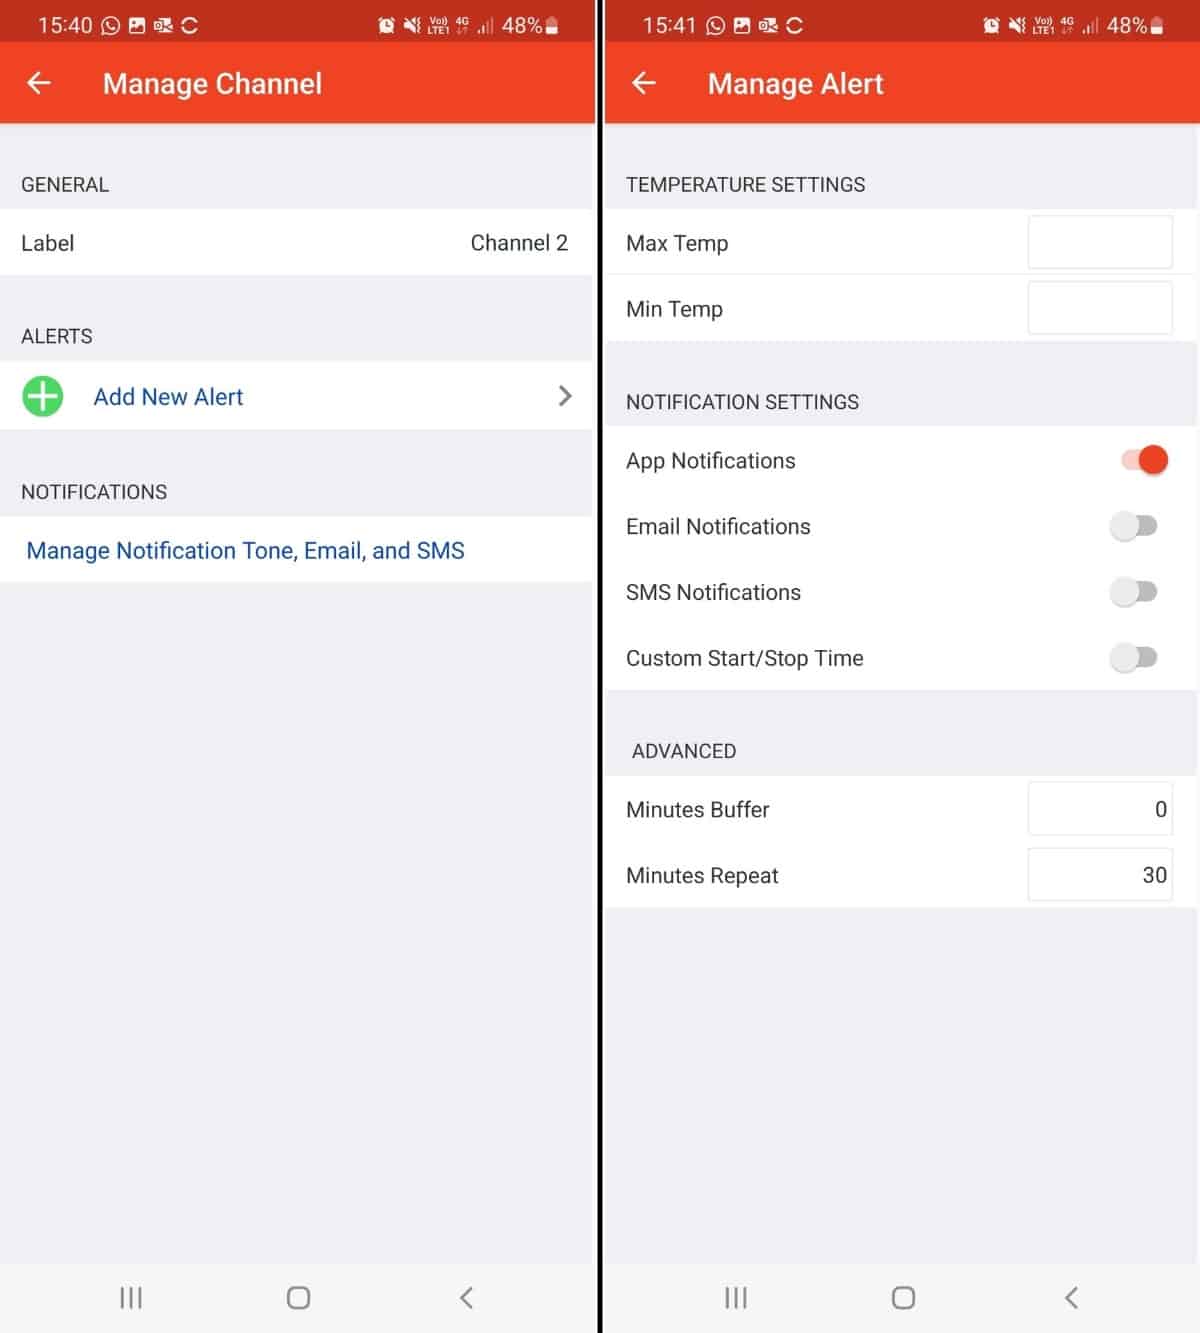 FireBoard app screenshots showing alerts settings screens.